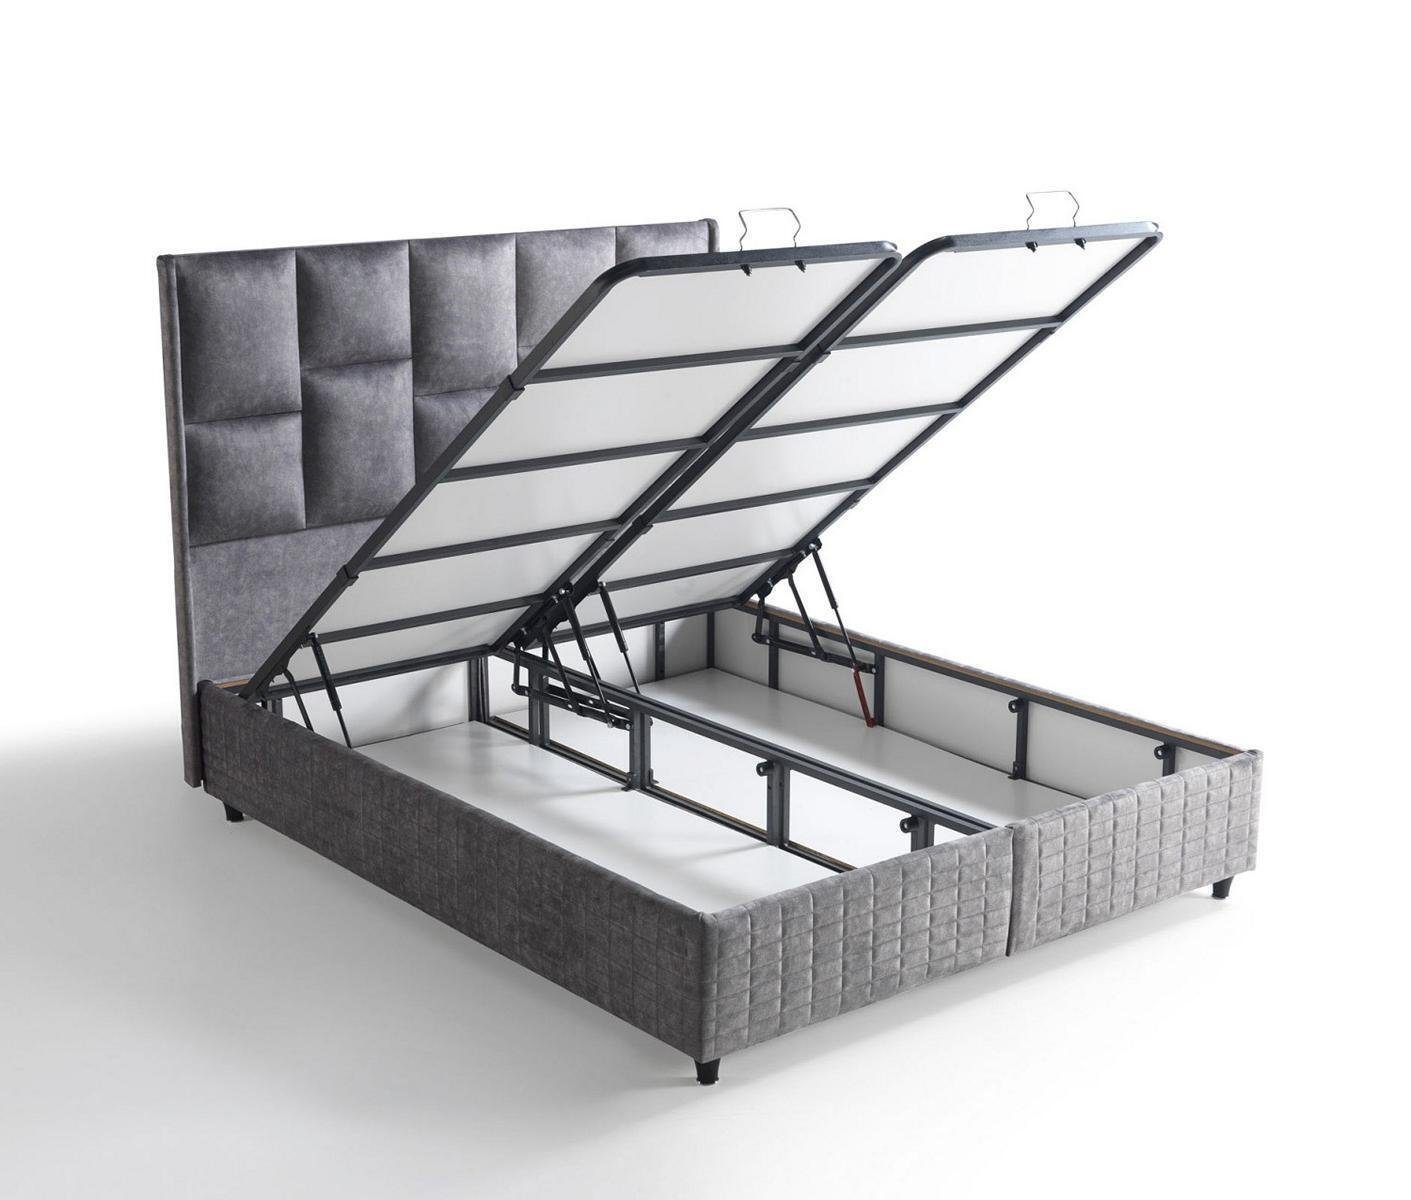 Luxus JVmoebel Europe Bett Beige (Bett), Silber In Schlafzimmer Design Bett Polster Betten Möbel Made